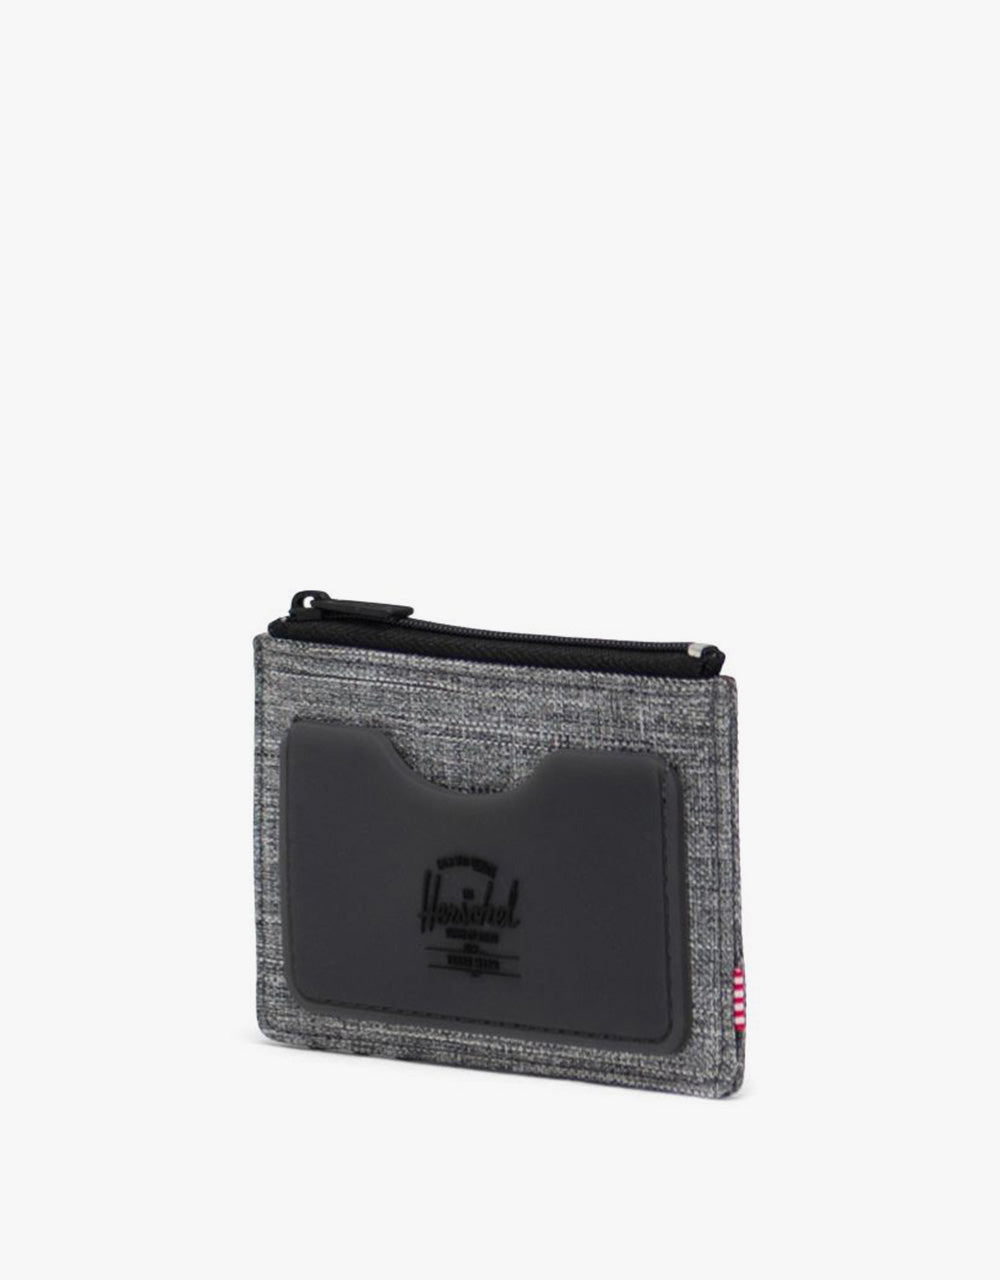 Herschel Supply Co. Oscar Rubber RFID Wallet - Raven Crosshatch/Black